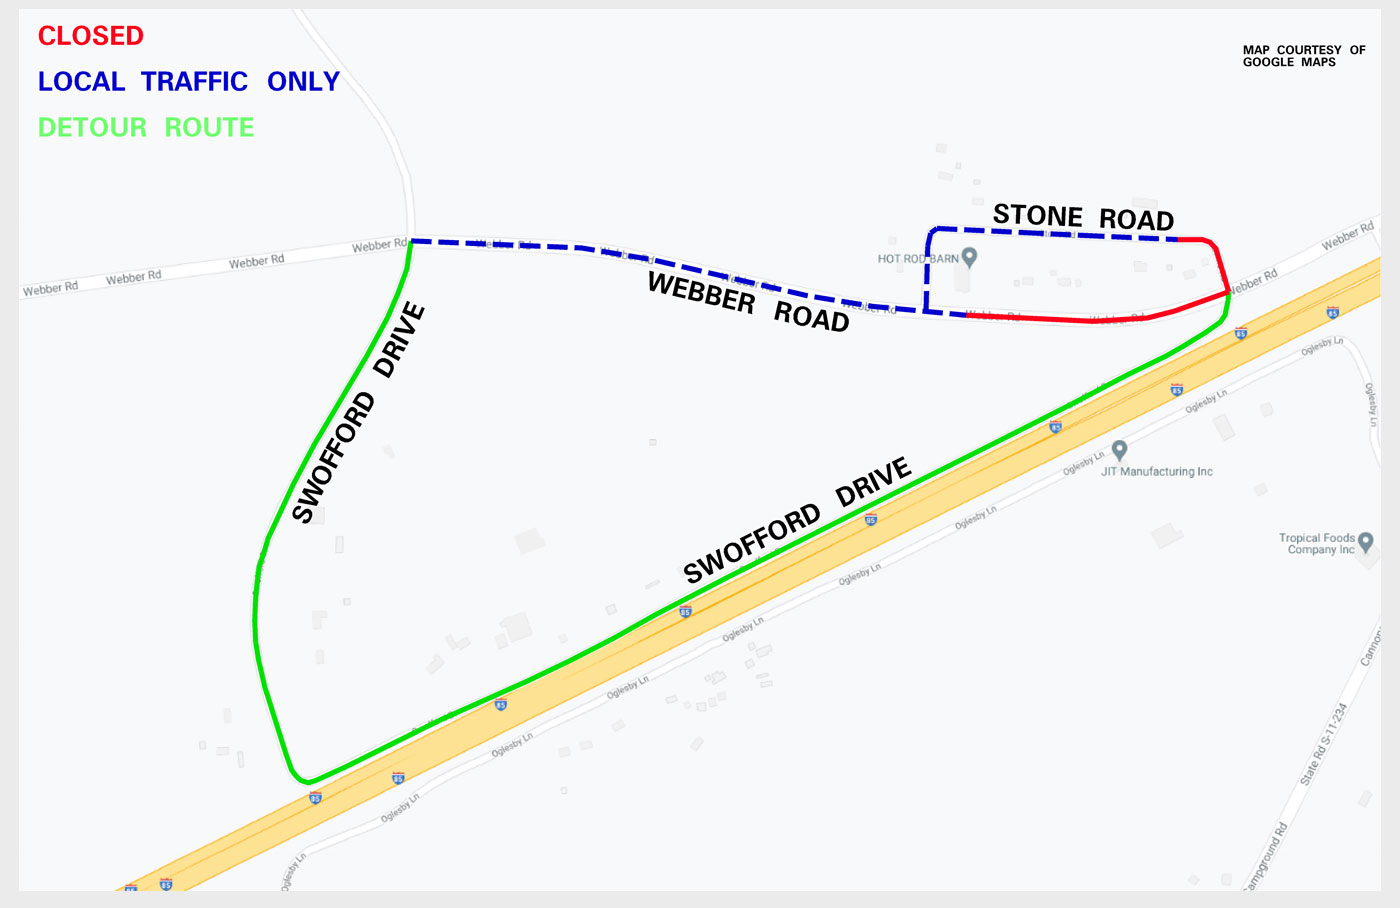 Swofford Road detour map